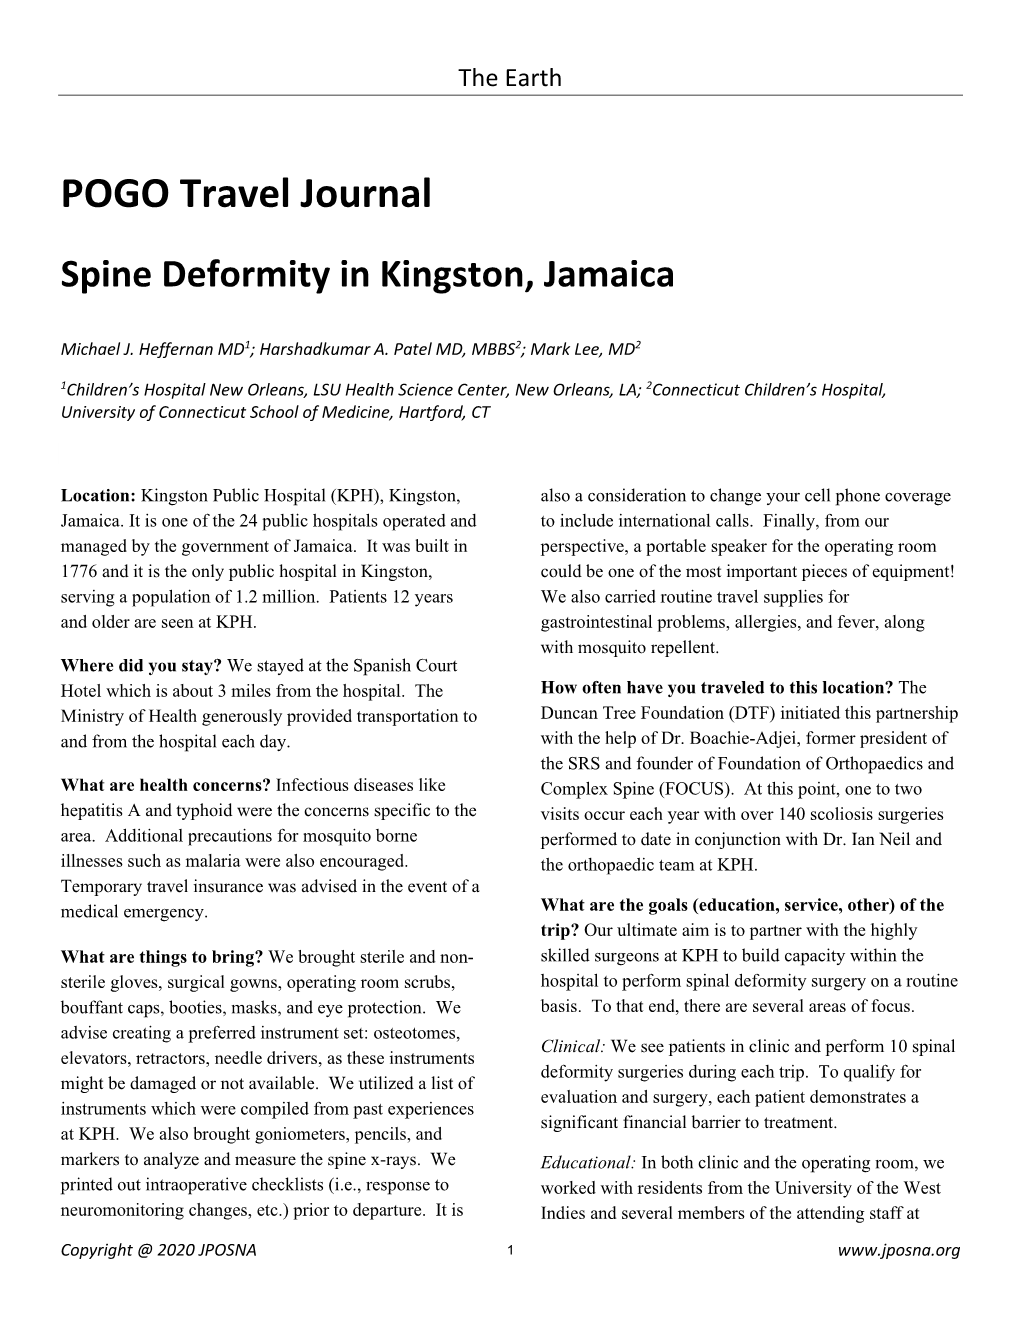 POGO Travel Journal Spine Deformity in Kingston, Jamaica